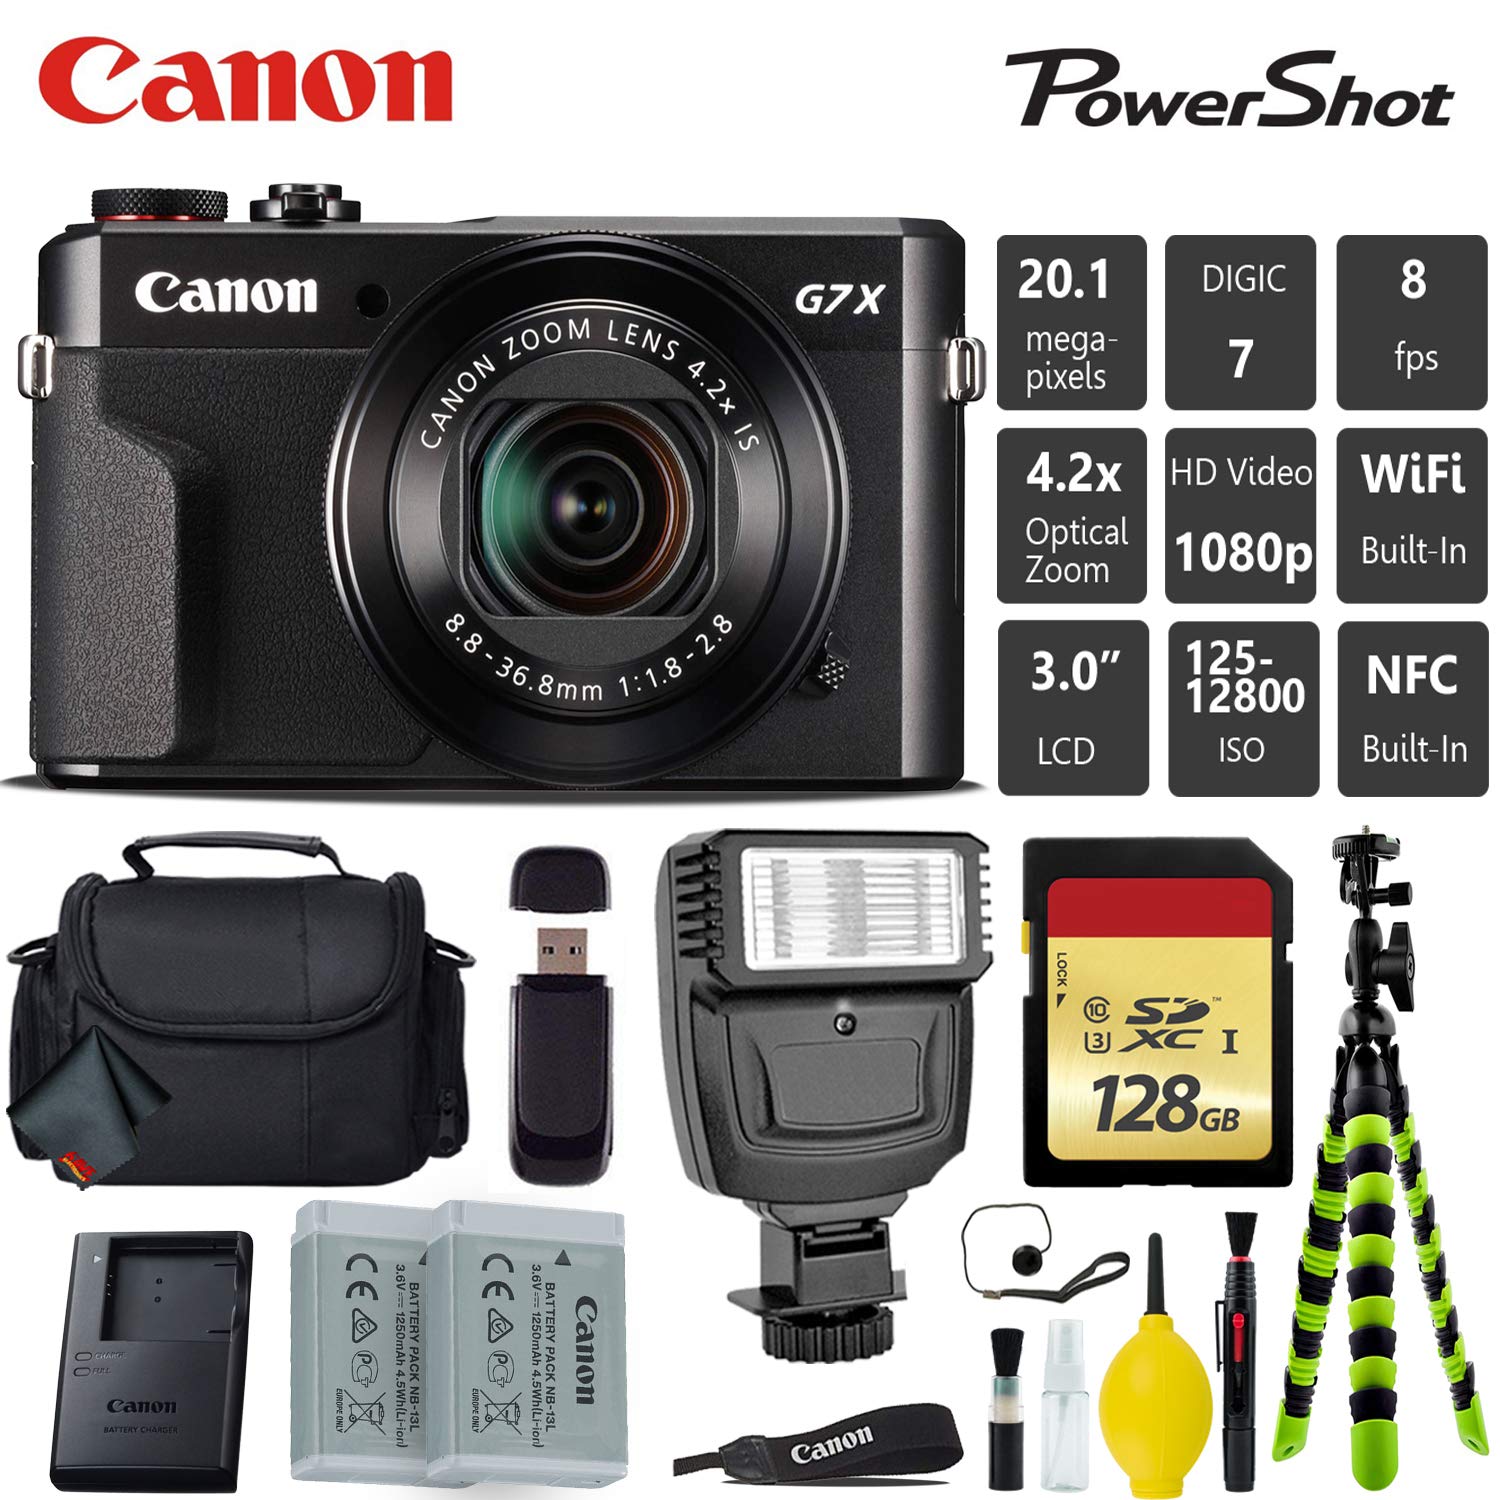 Canon PowerShot G7 X Mark II Point and Shoot Digital Camera + Extra Battery + Digital Flash + Camera Case + 128GB Card Advanced Bundle